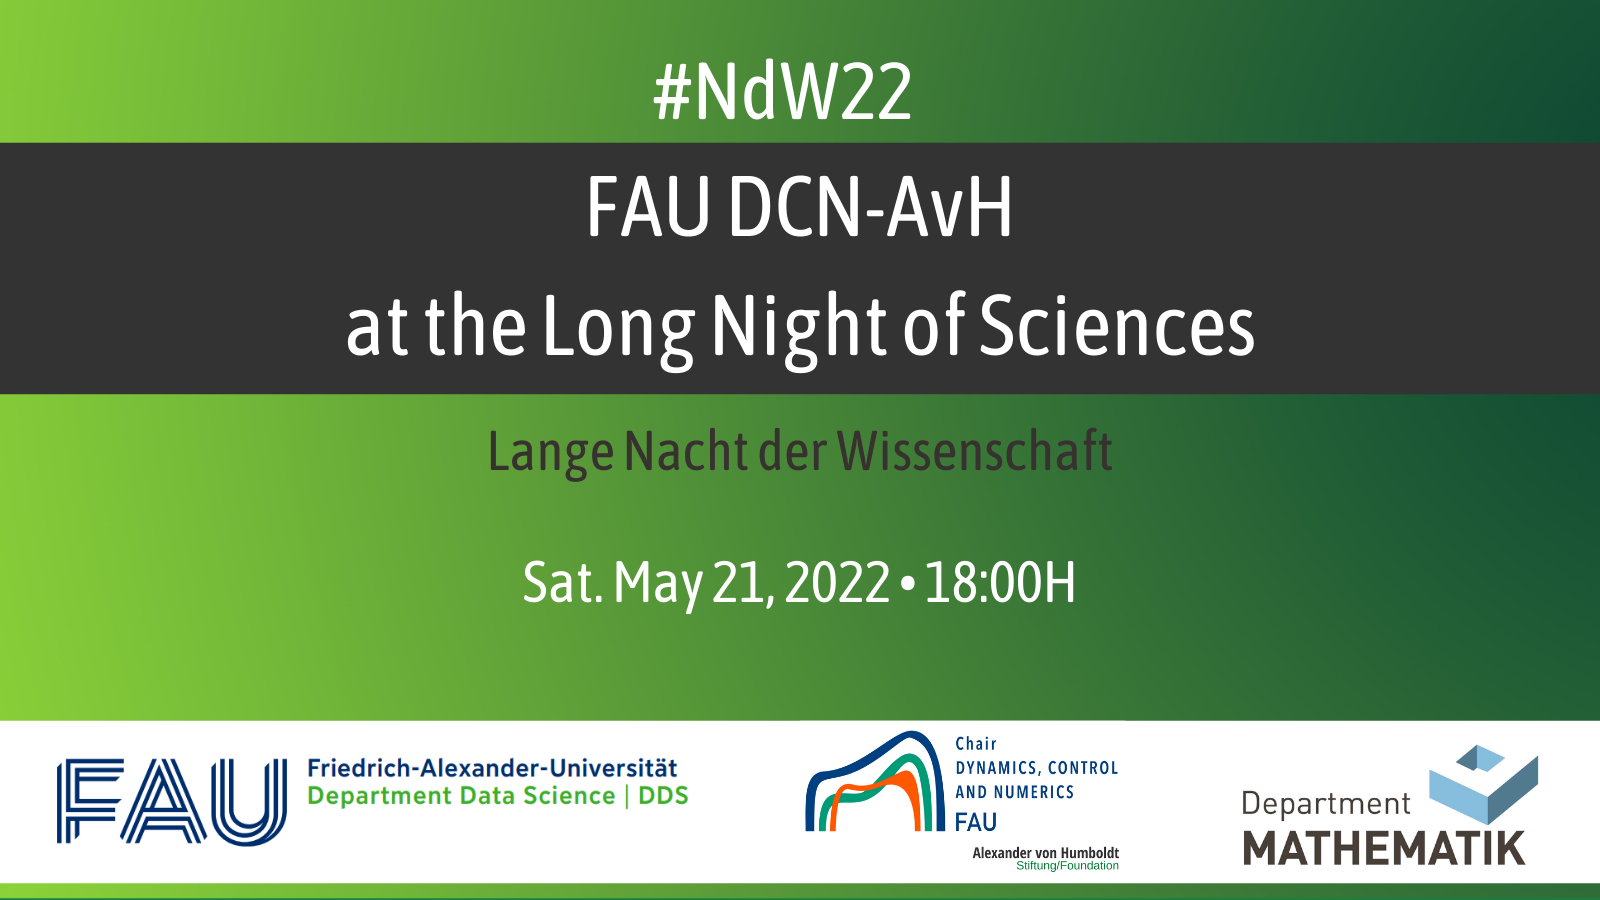 FAU DCN-AvH at #NdW22 Long Night of Sciences